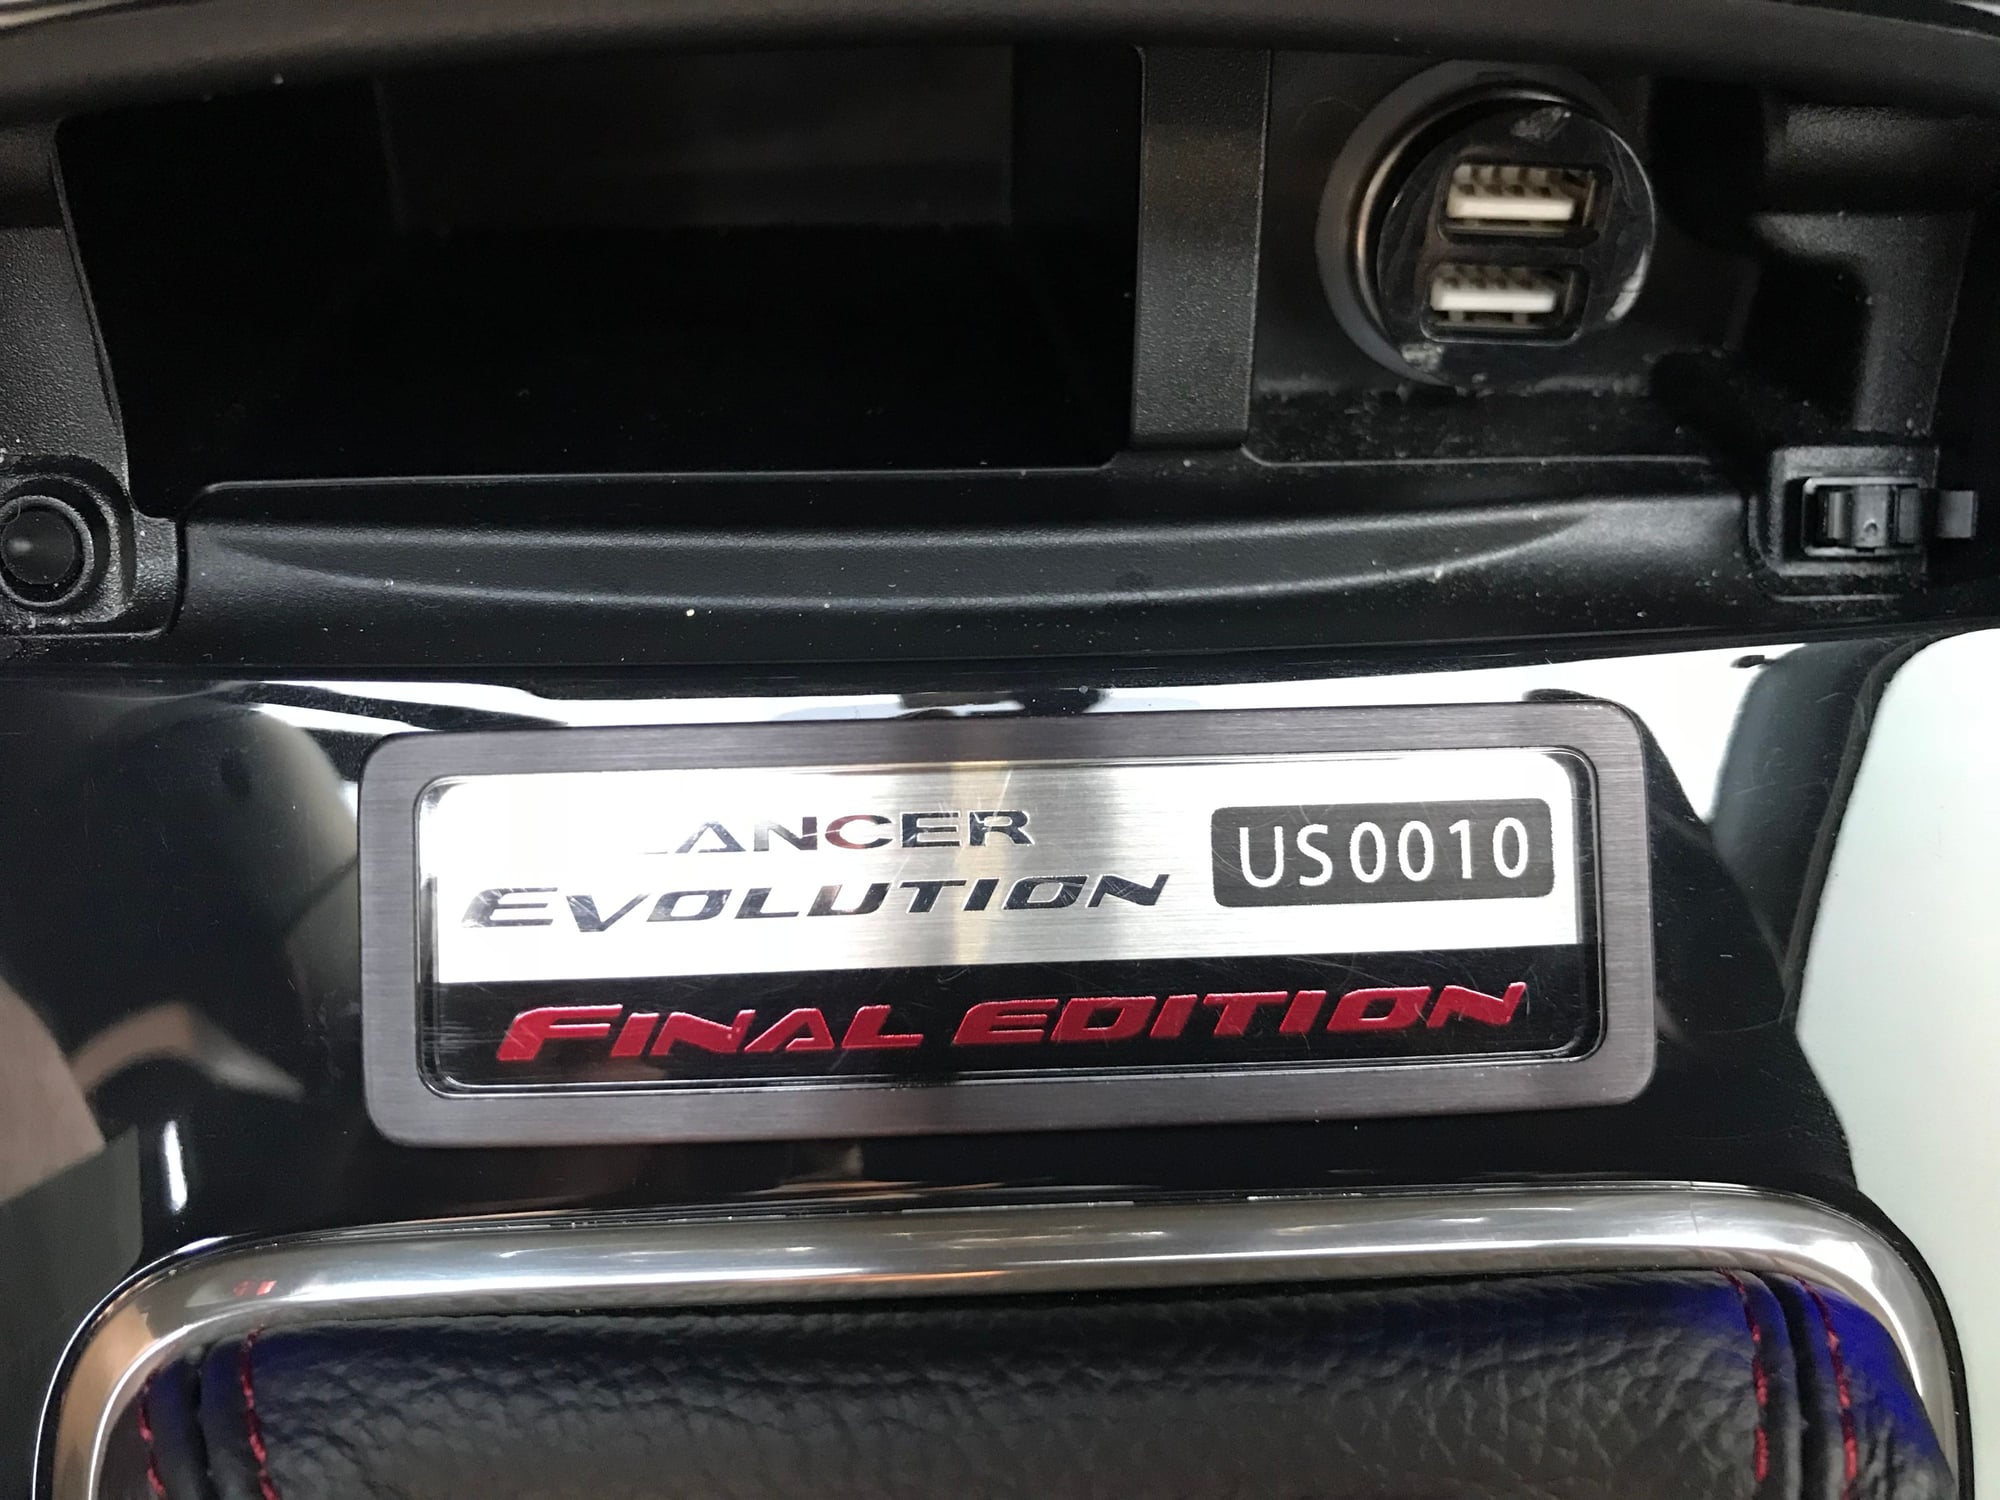 2015 Mitsubishi Lancer Evolution - 2015 Low number Final Edition - Used - VIN JA32W7FV4FU027172 - 27,500 Miles - 4 cyl - AWD - Manual - Sedan - Gray - Houston, TX 77067, United States